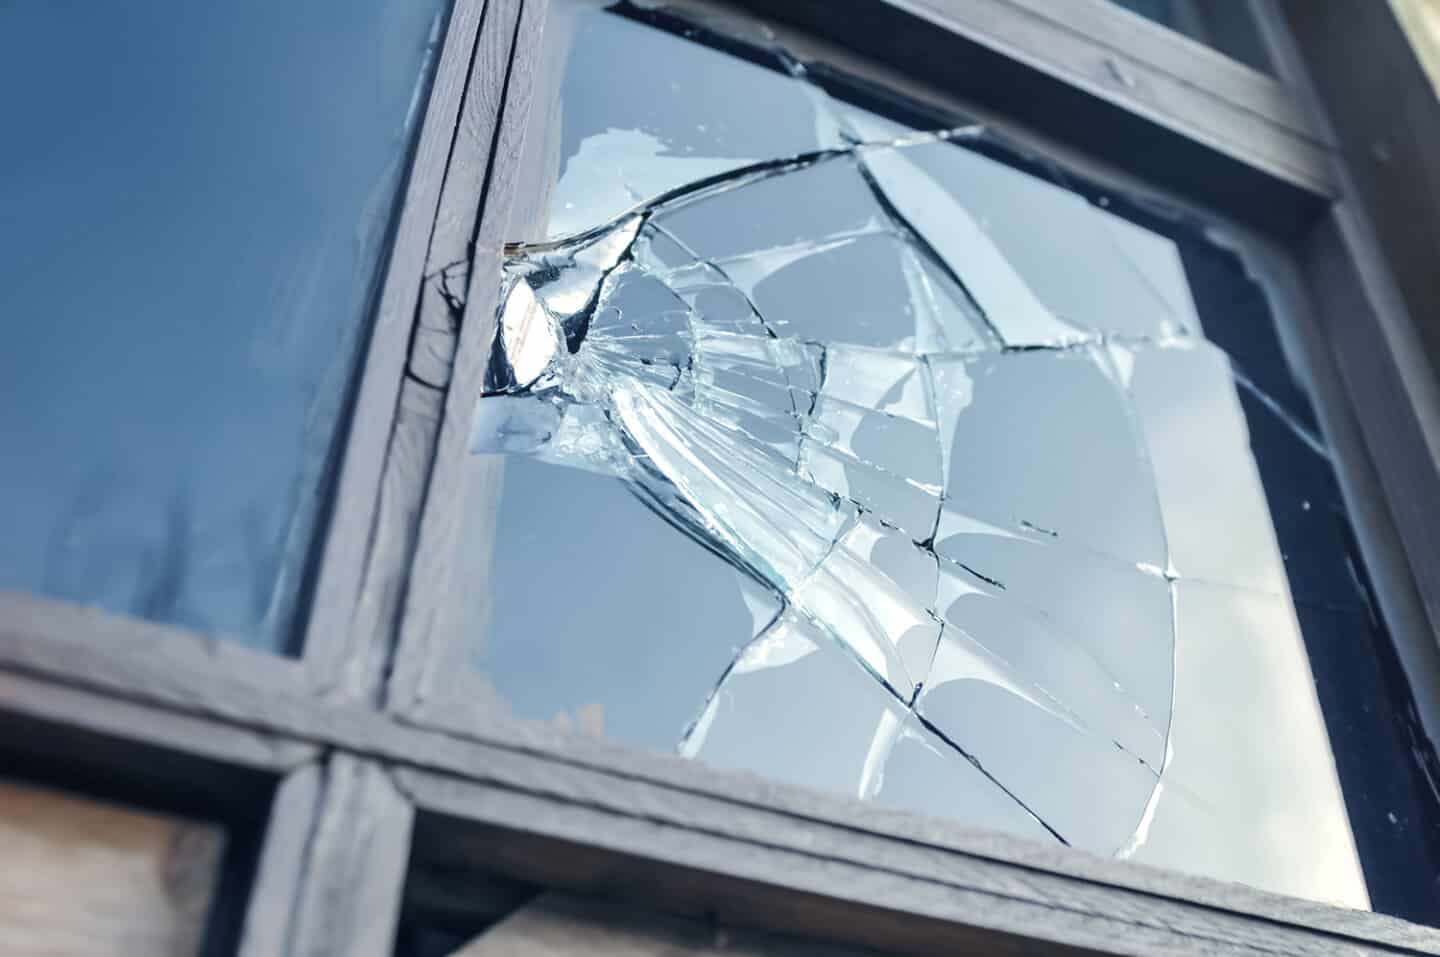 hail damage to windows crack
